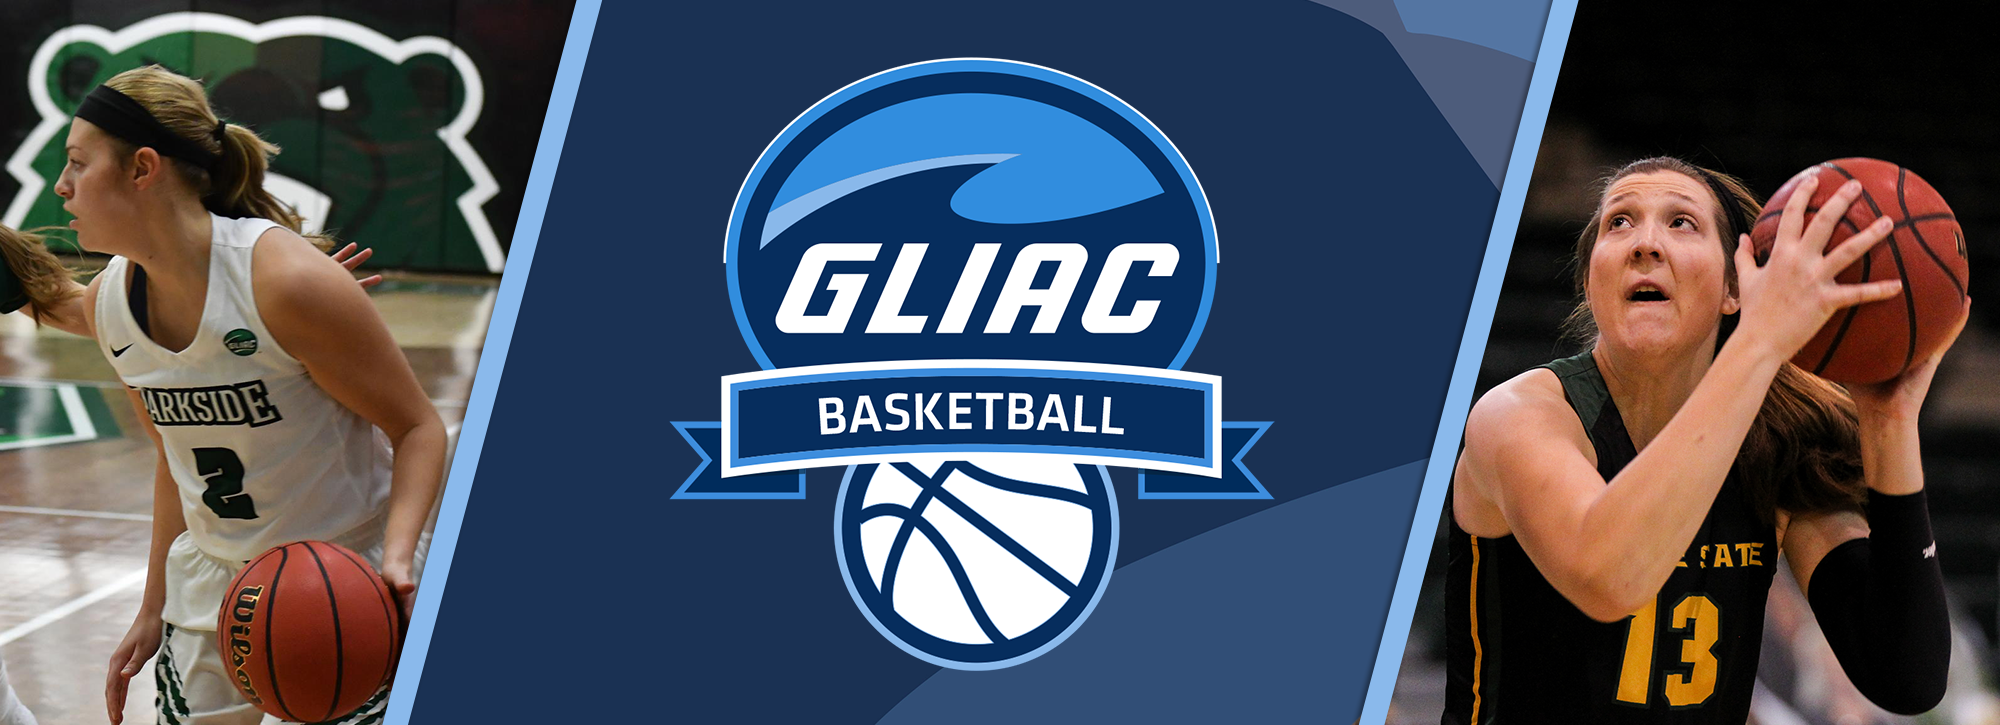 UWP's Nelson, WSU's Cherney, Claim GLIAC Women's Basketball Weekly Honors